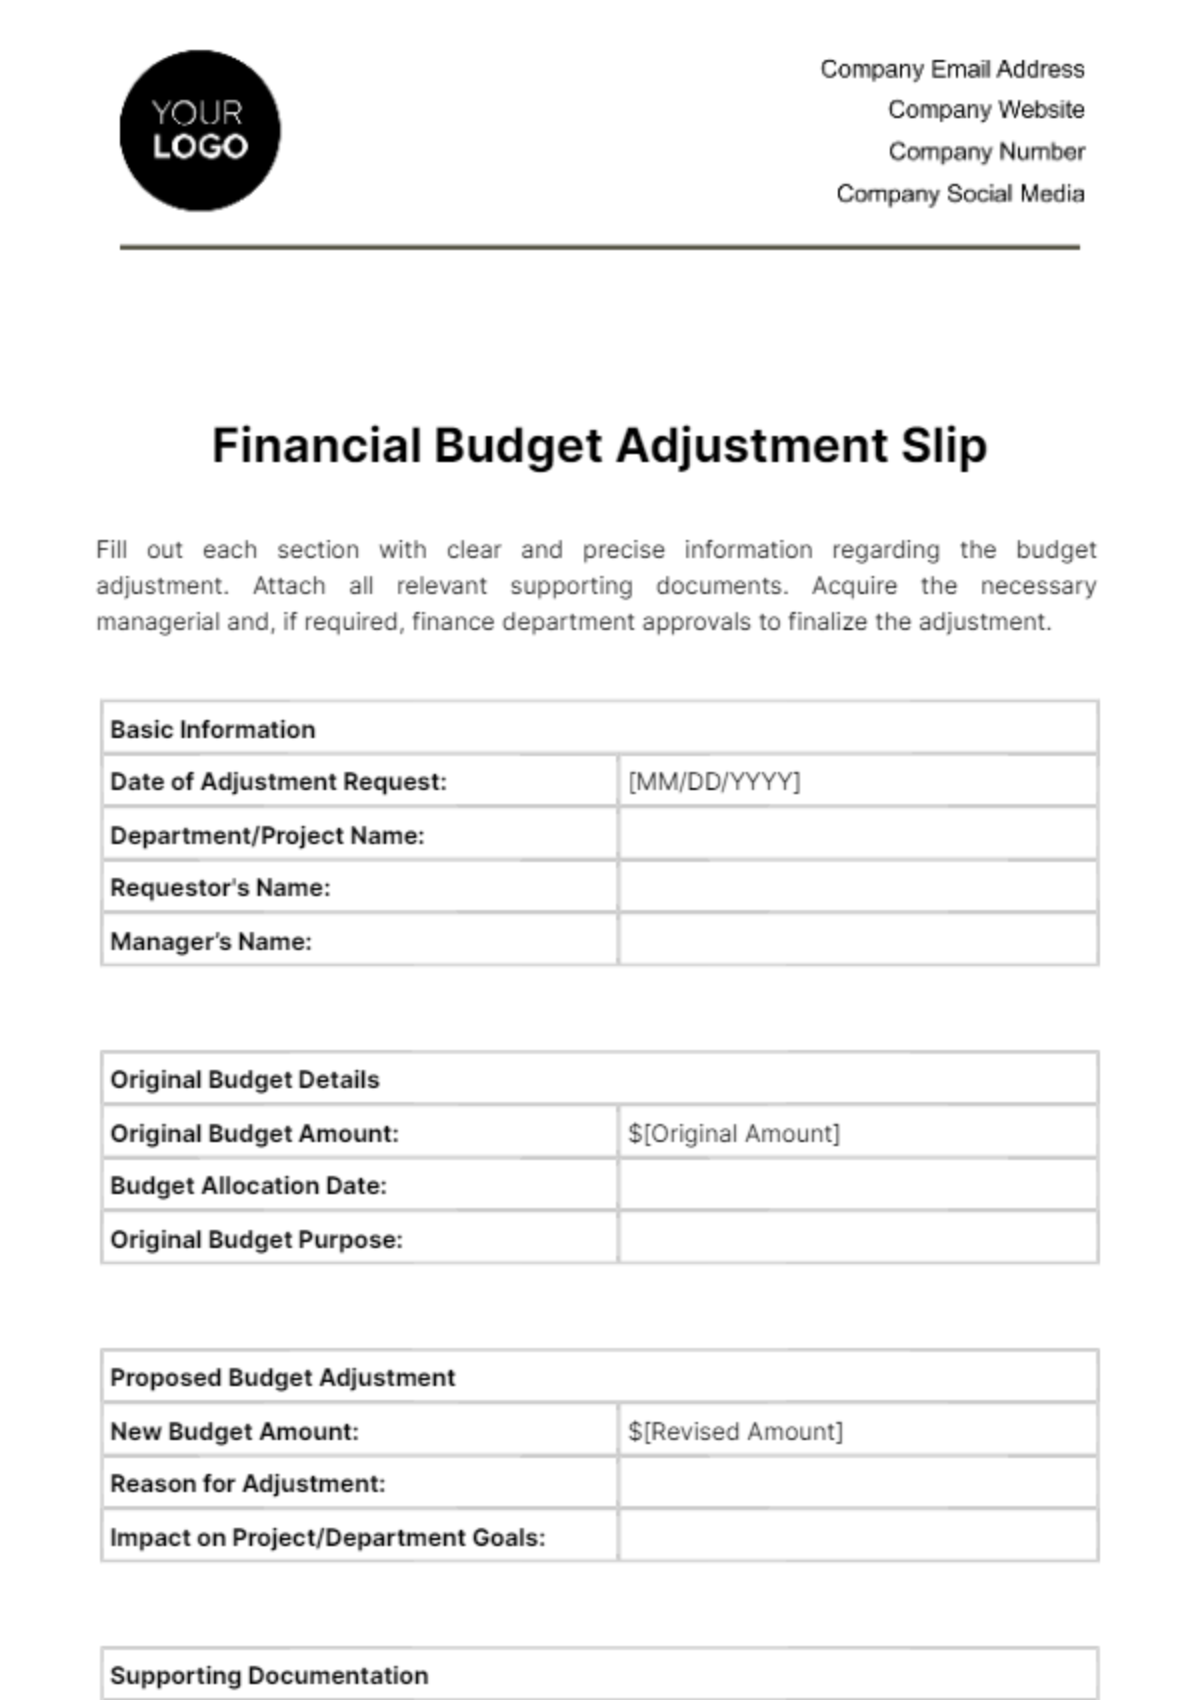 Financial Budget Adjustment Slip Template